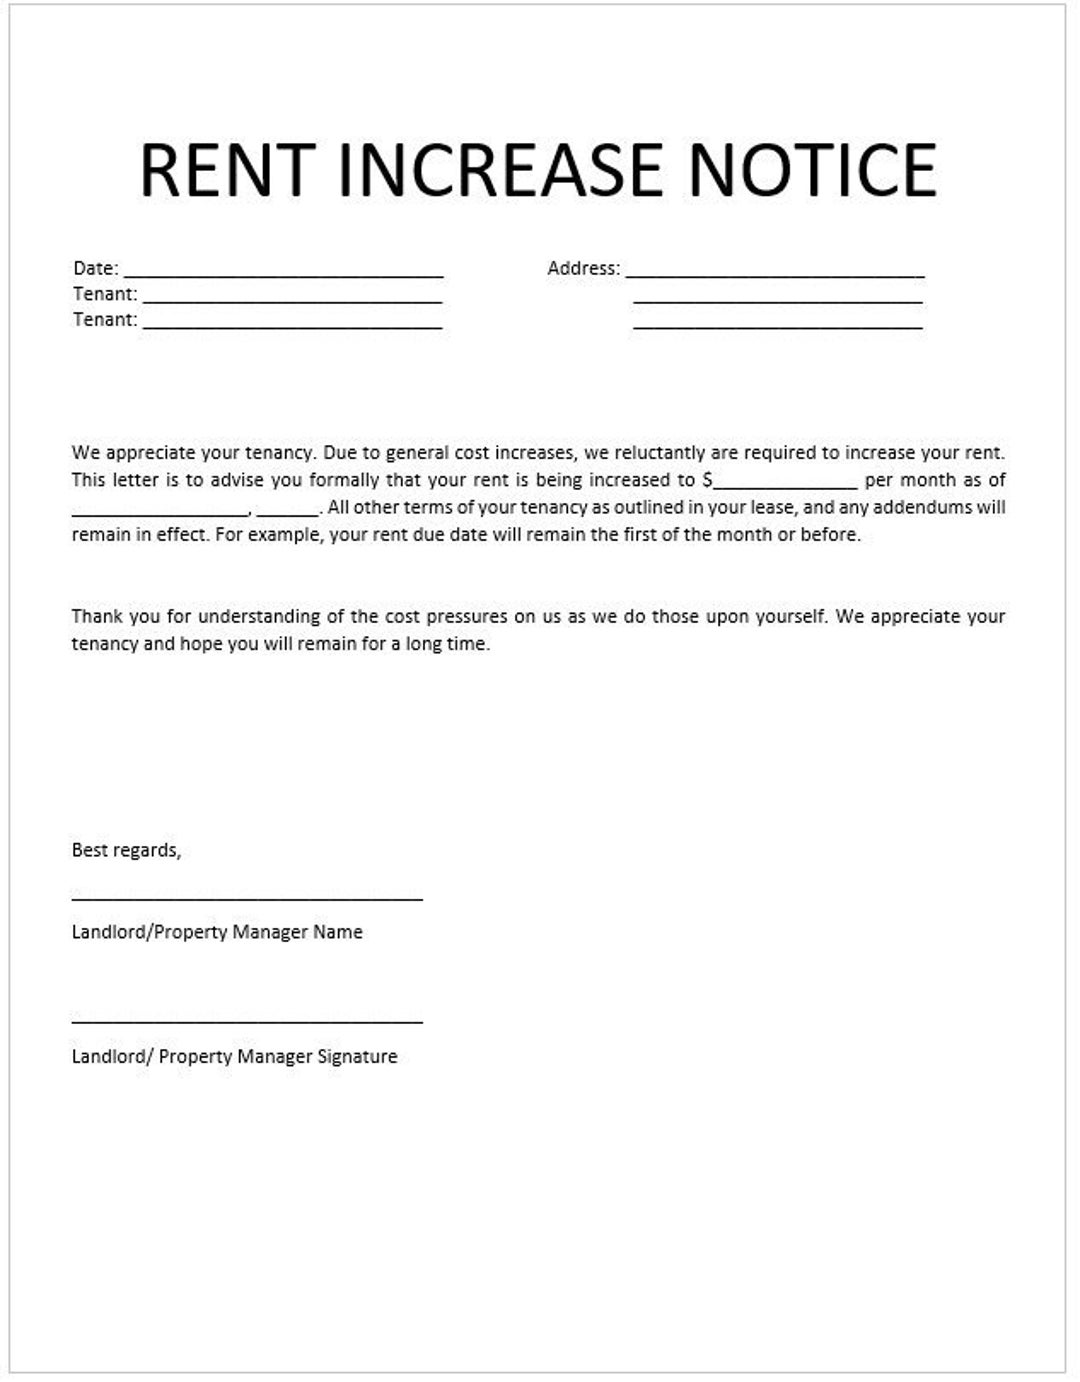 rental-increase-notice-rent-increase-form-editable-word-etsy